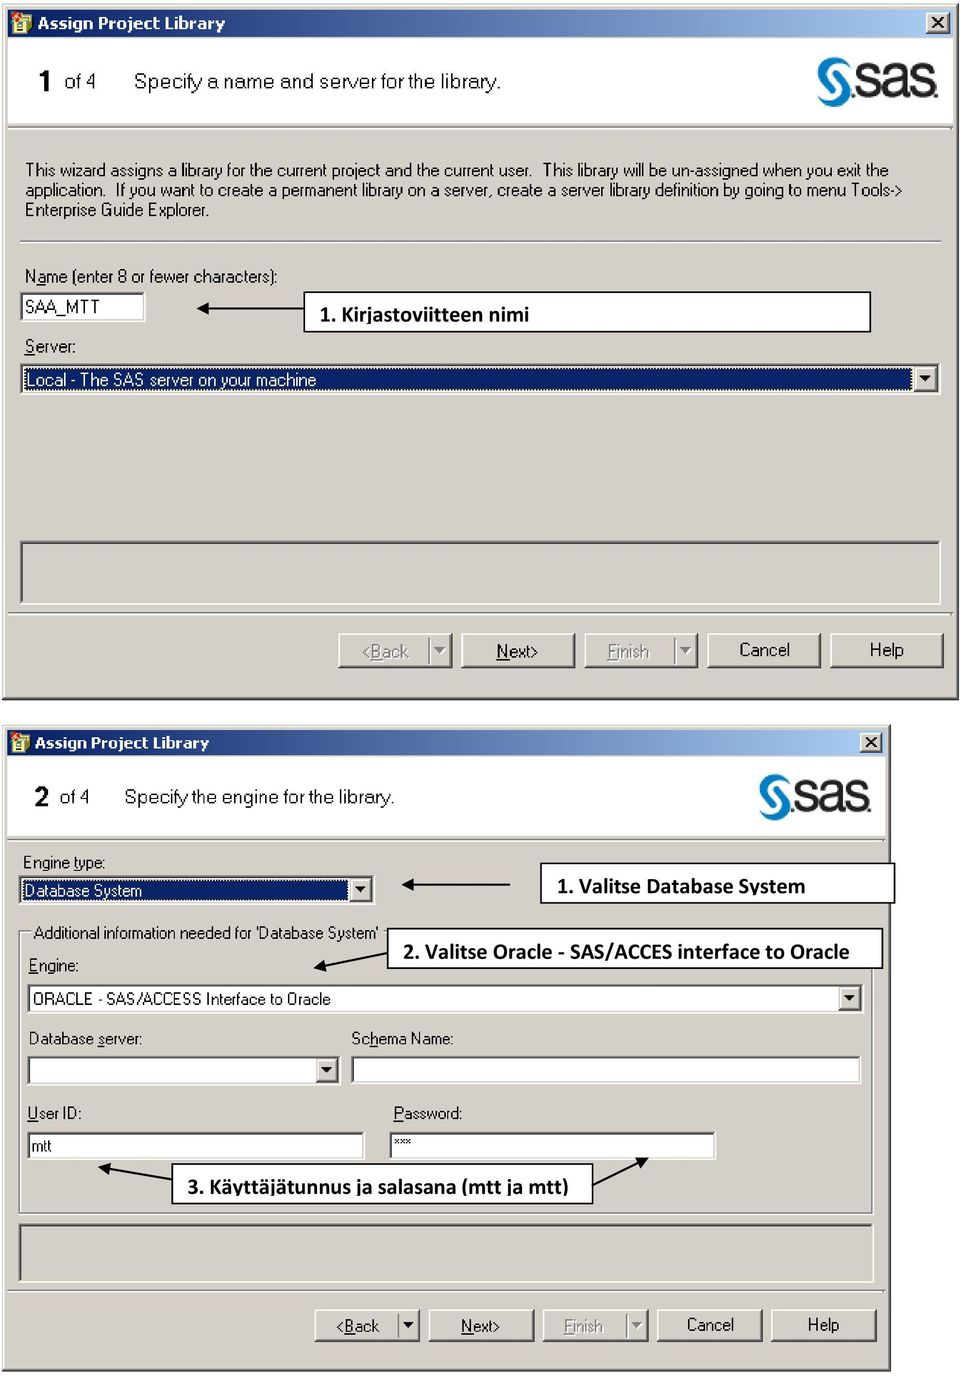 Valitse Oracle - SAS/ACCES